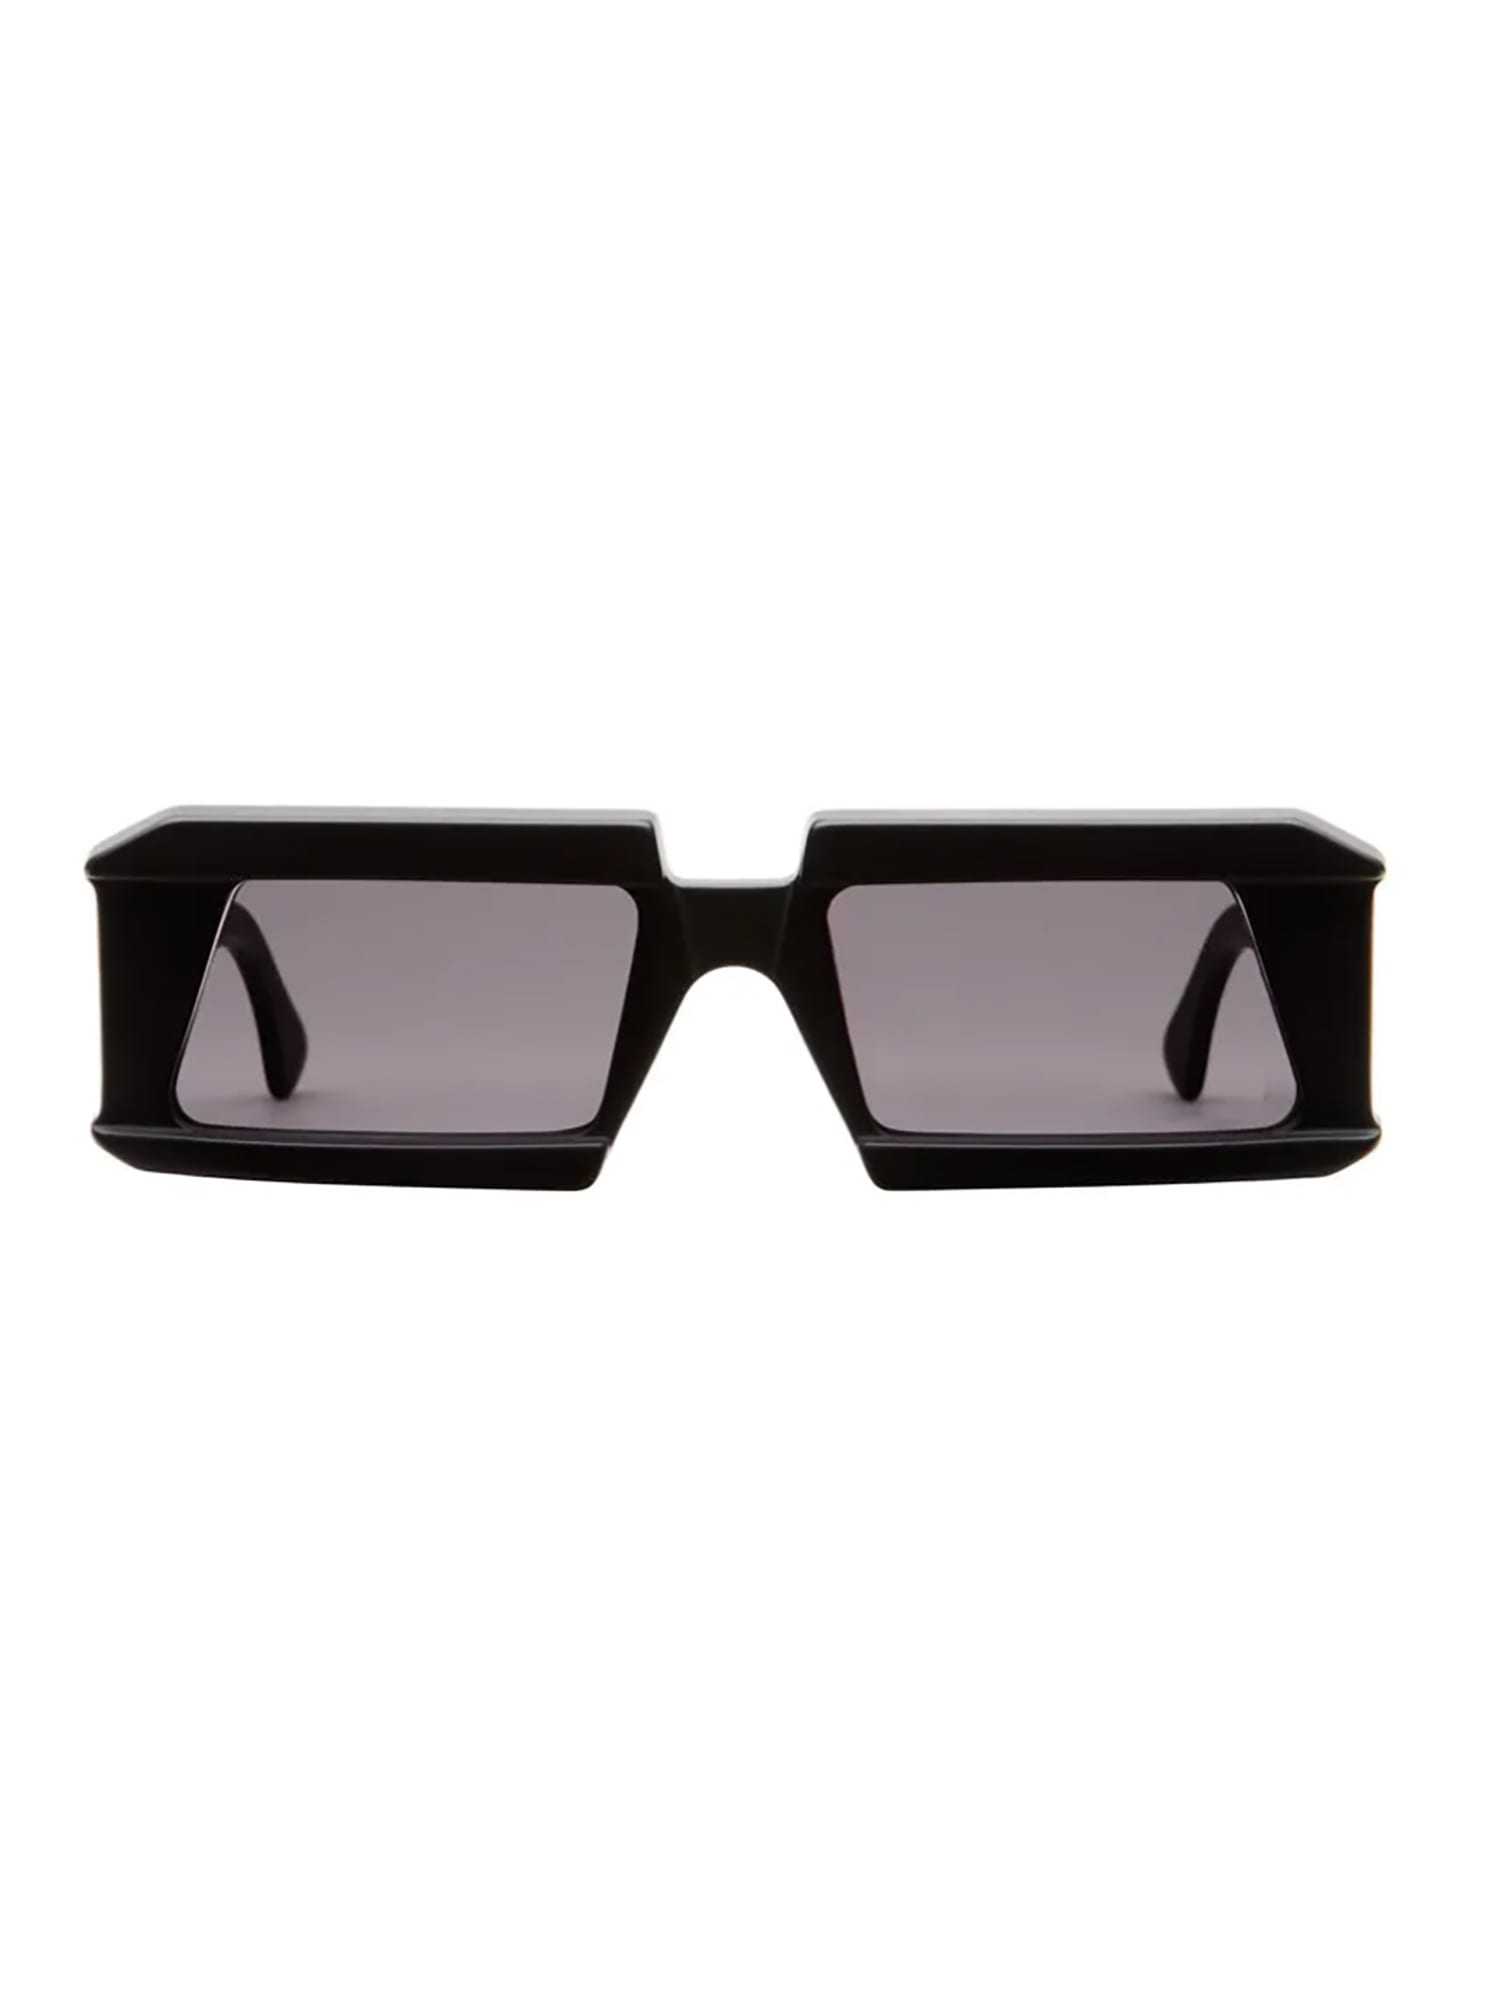 X20 Sunglasses